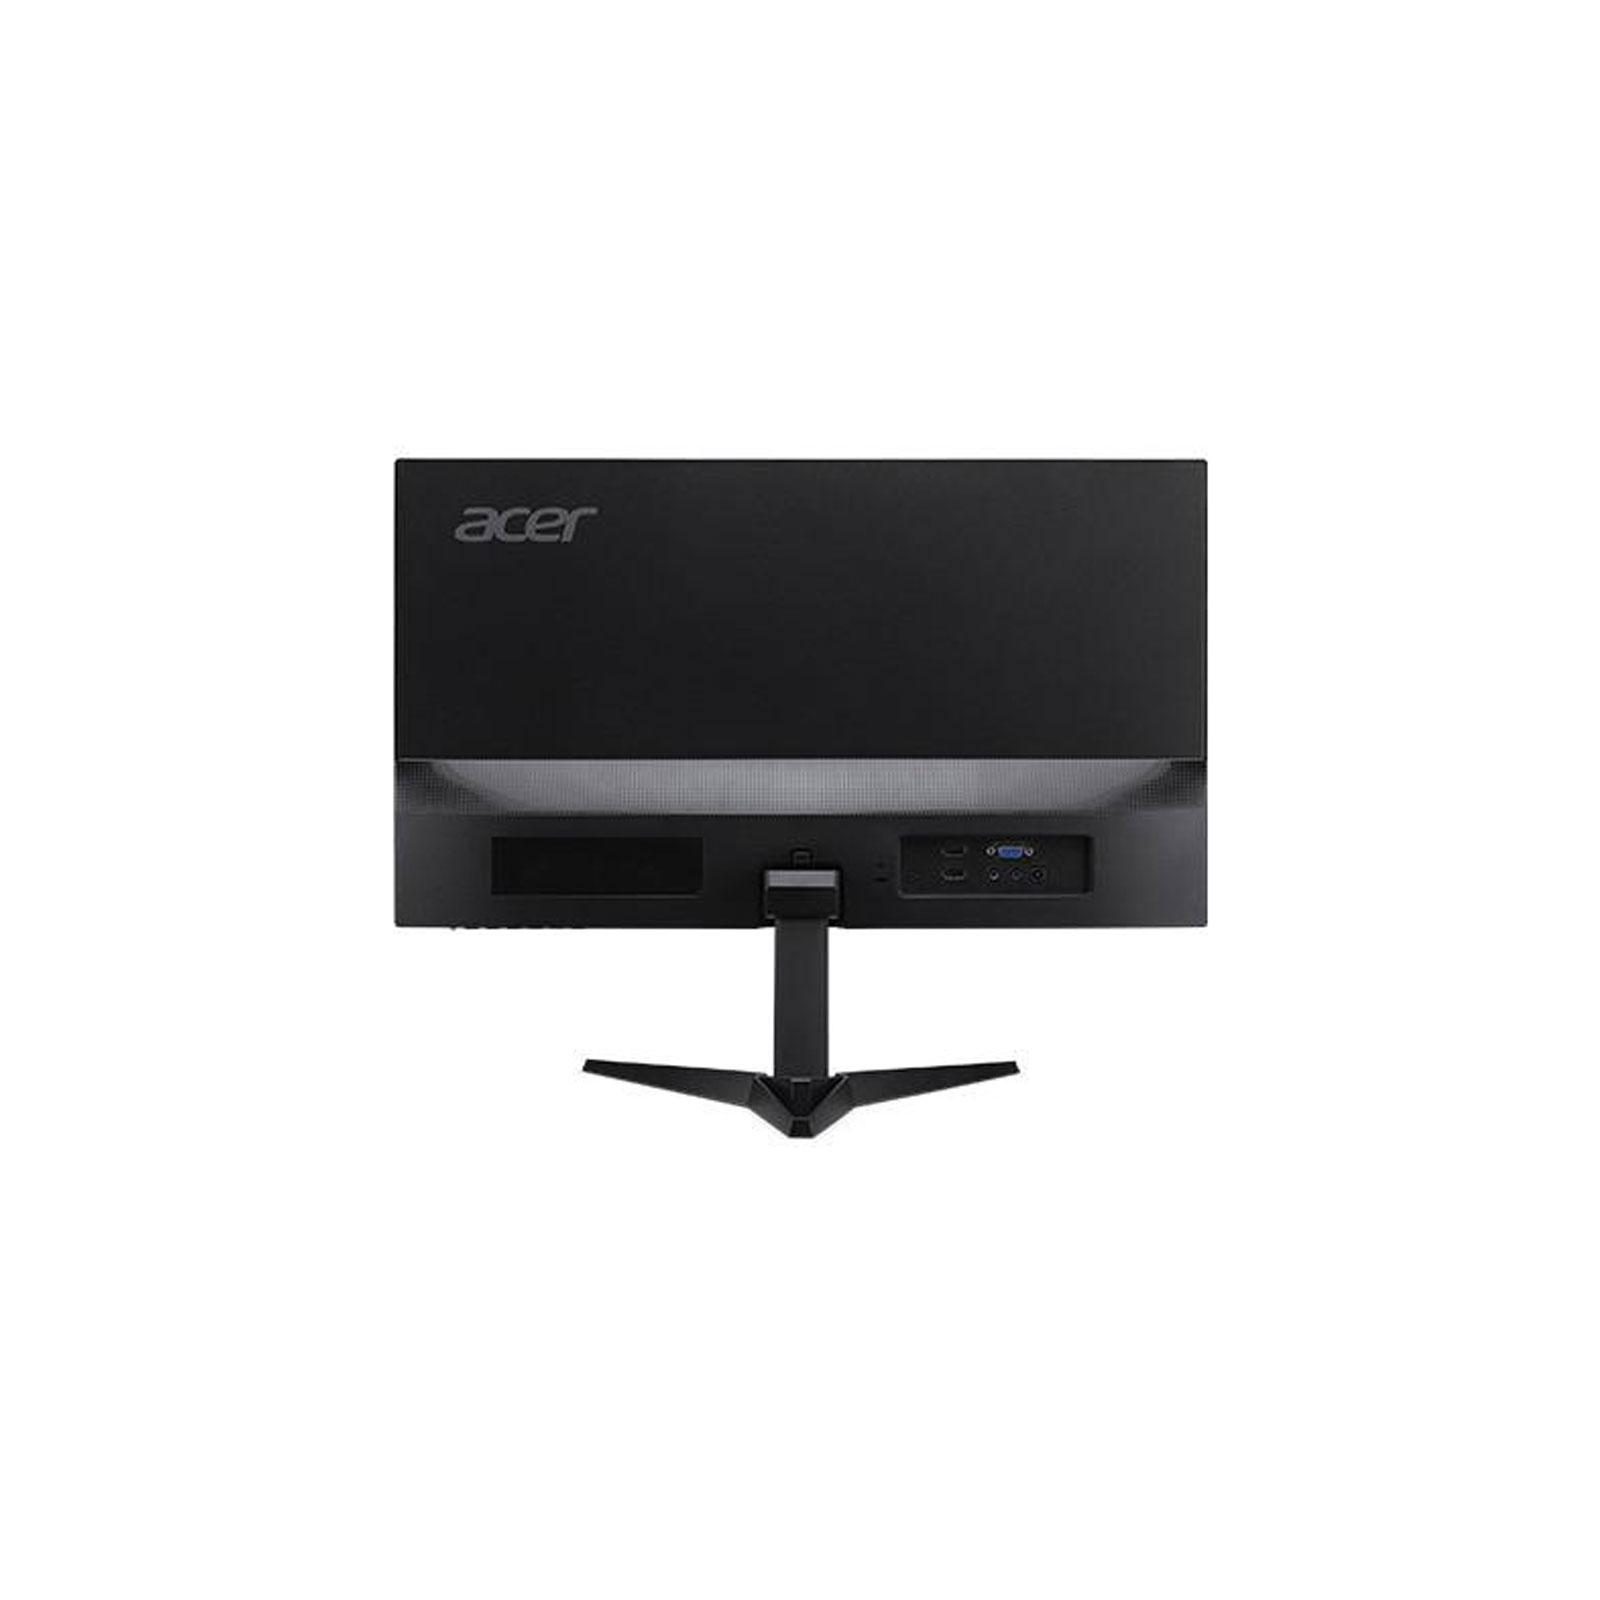 Acer Nitro VG273bii Monitor